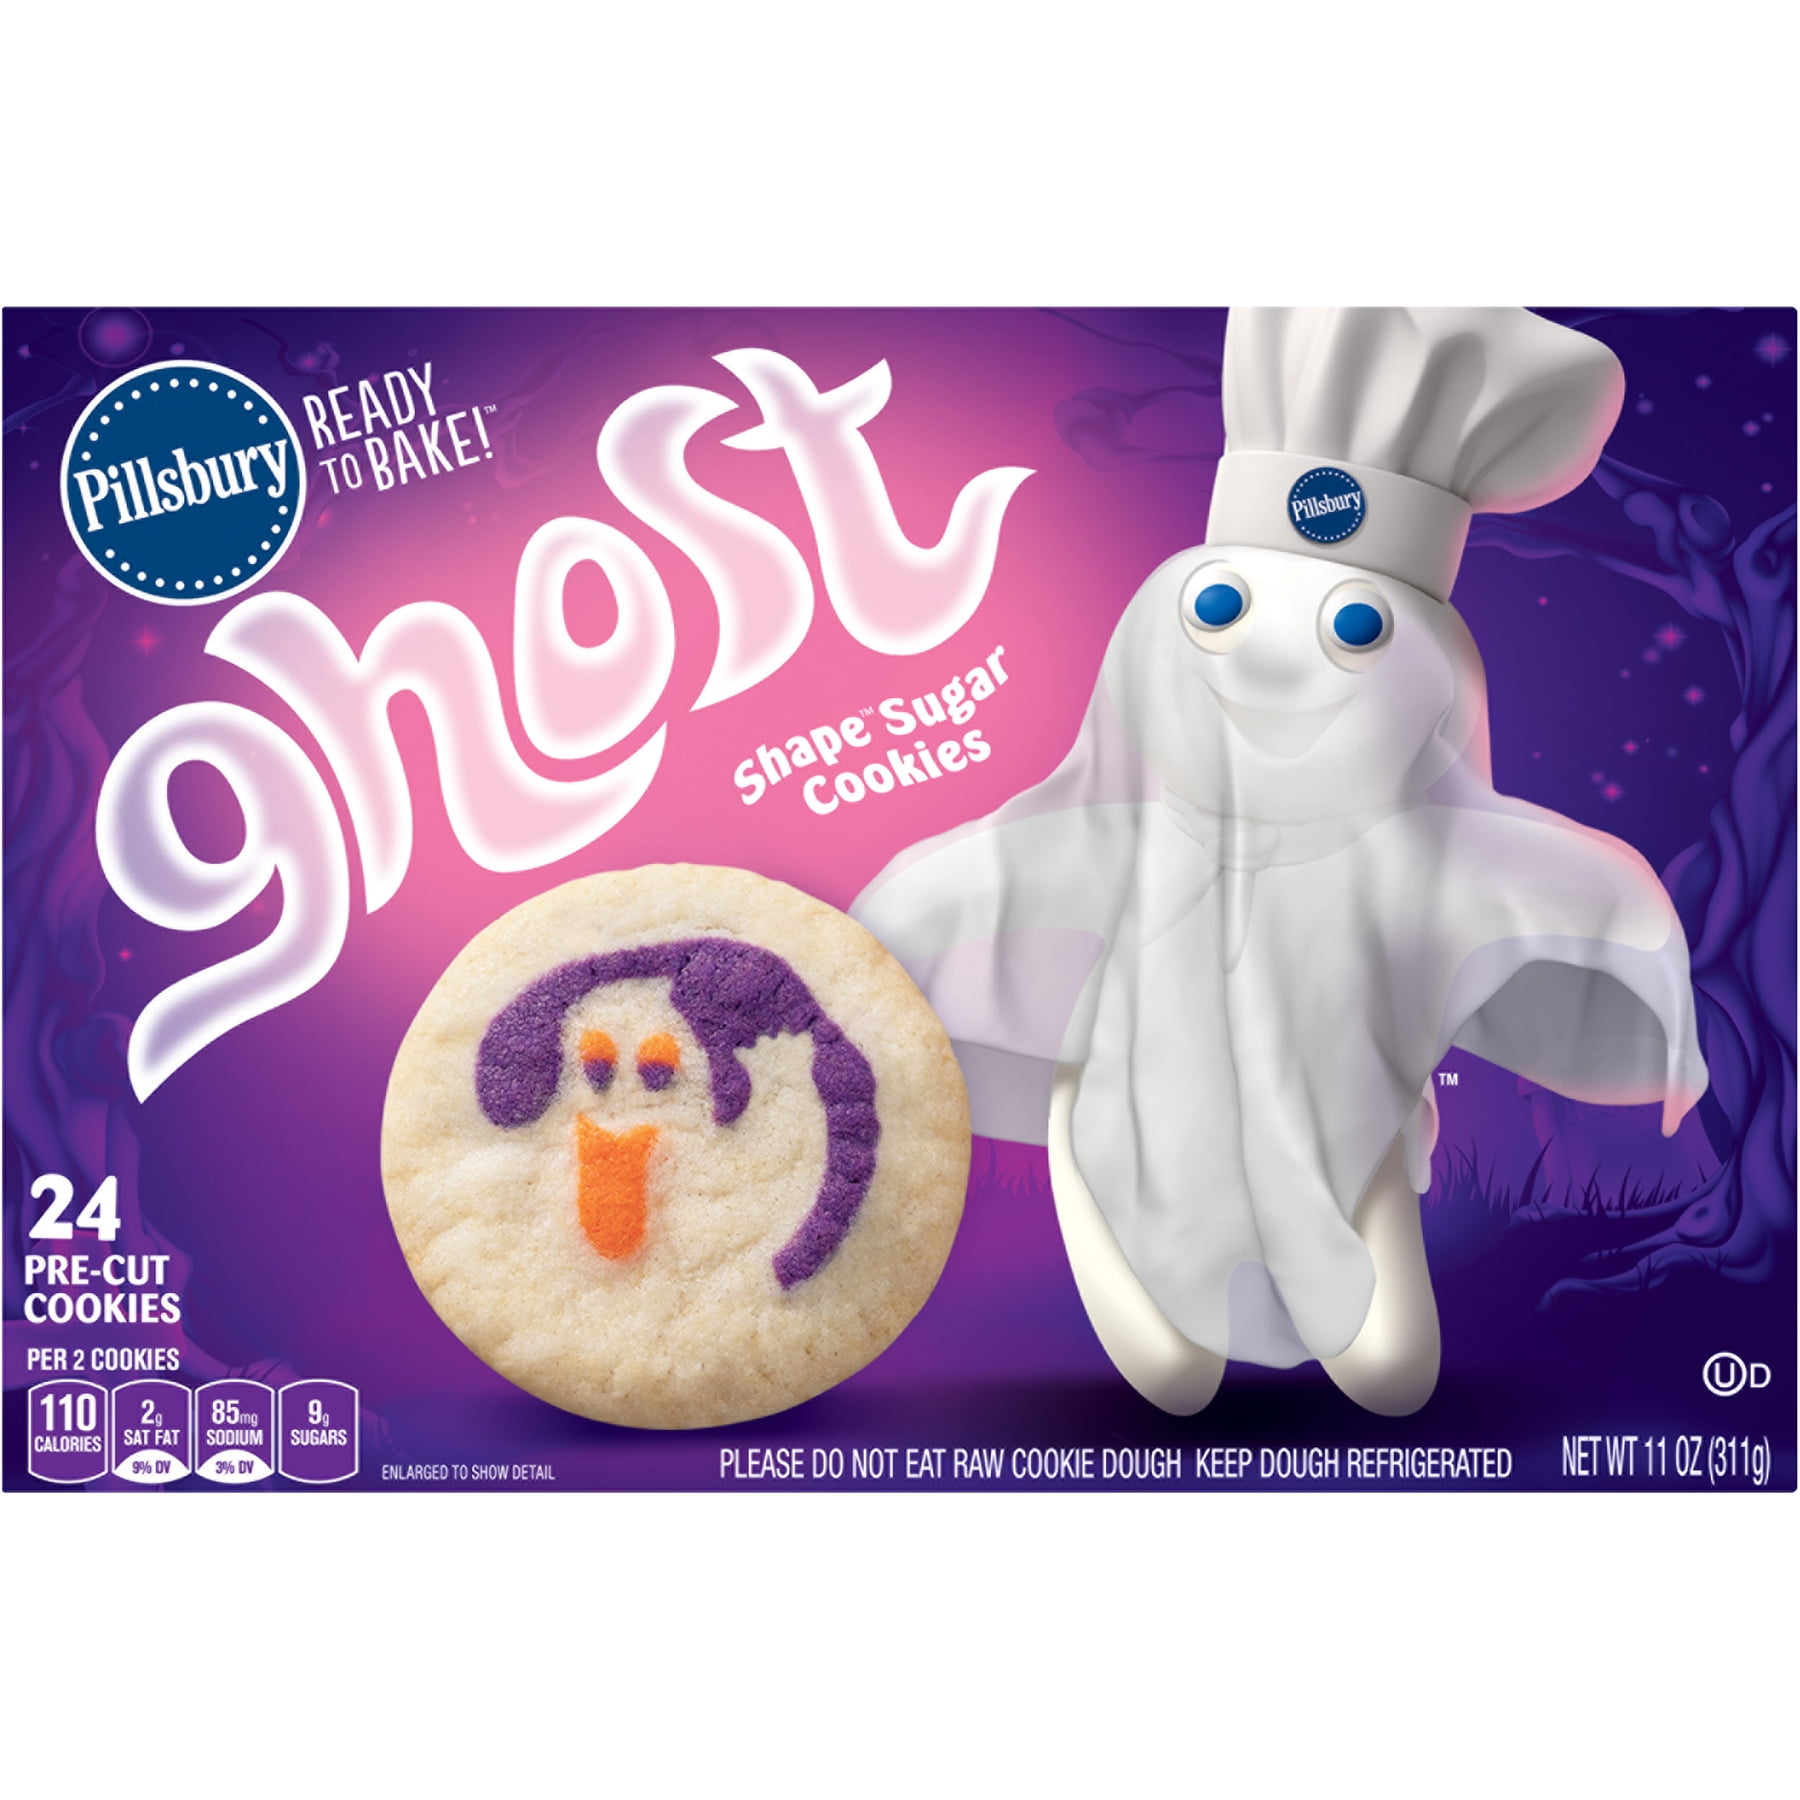 Pillsbury Ready to Bake!™ Ghost Shape® Sugar Cookies, 11.0 OZ - Walmart.com - Walmart.com